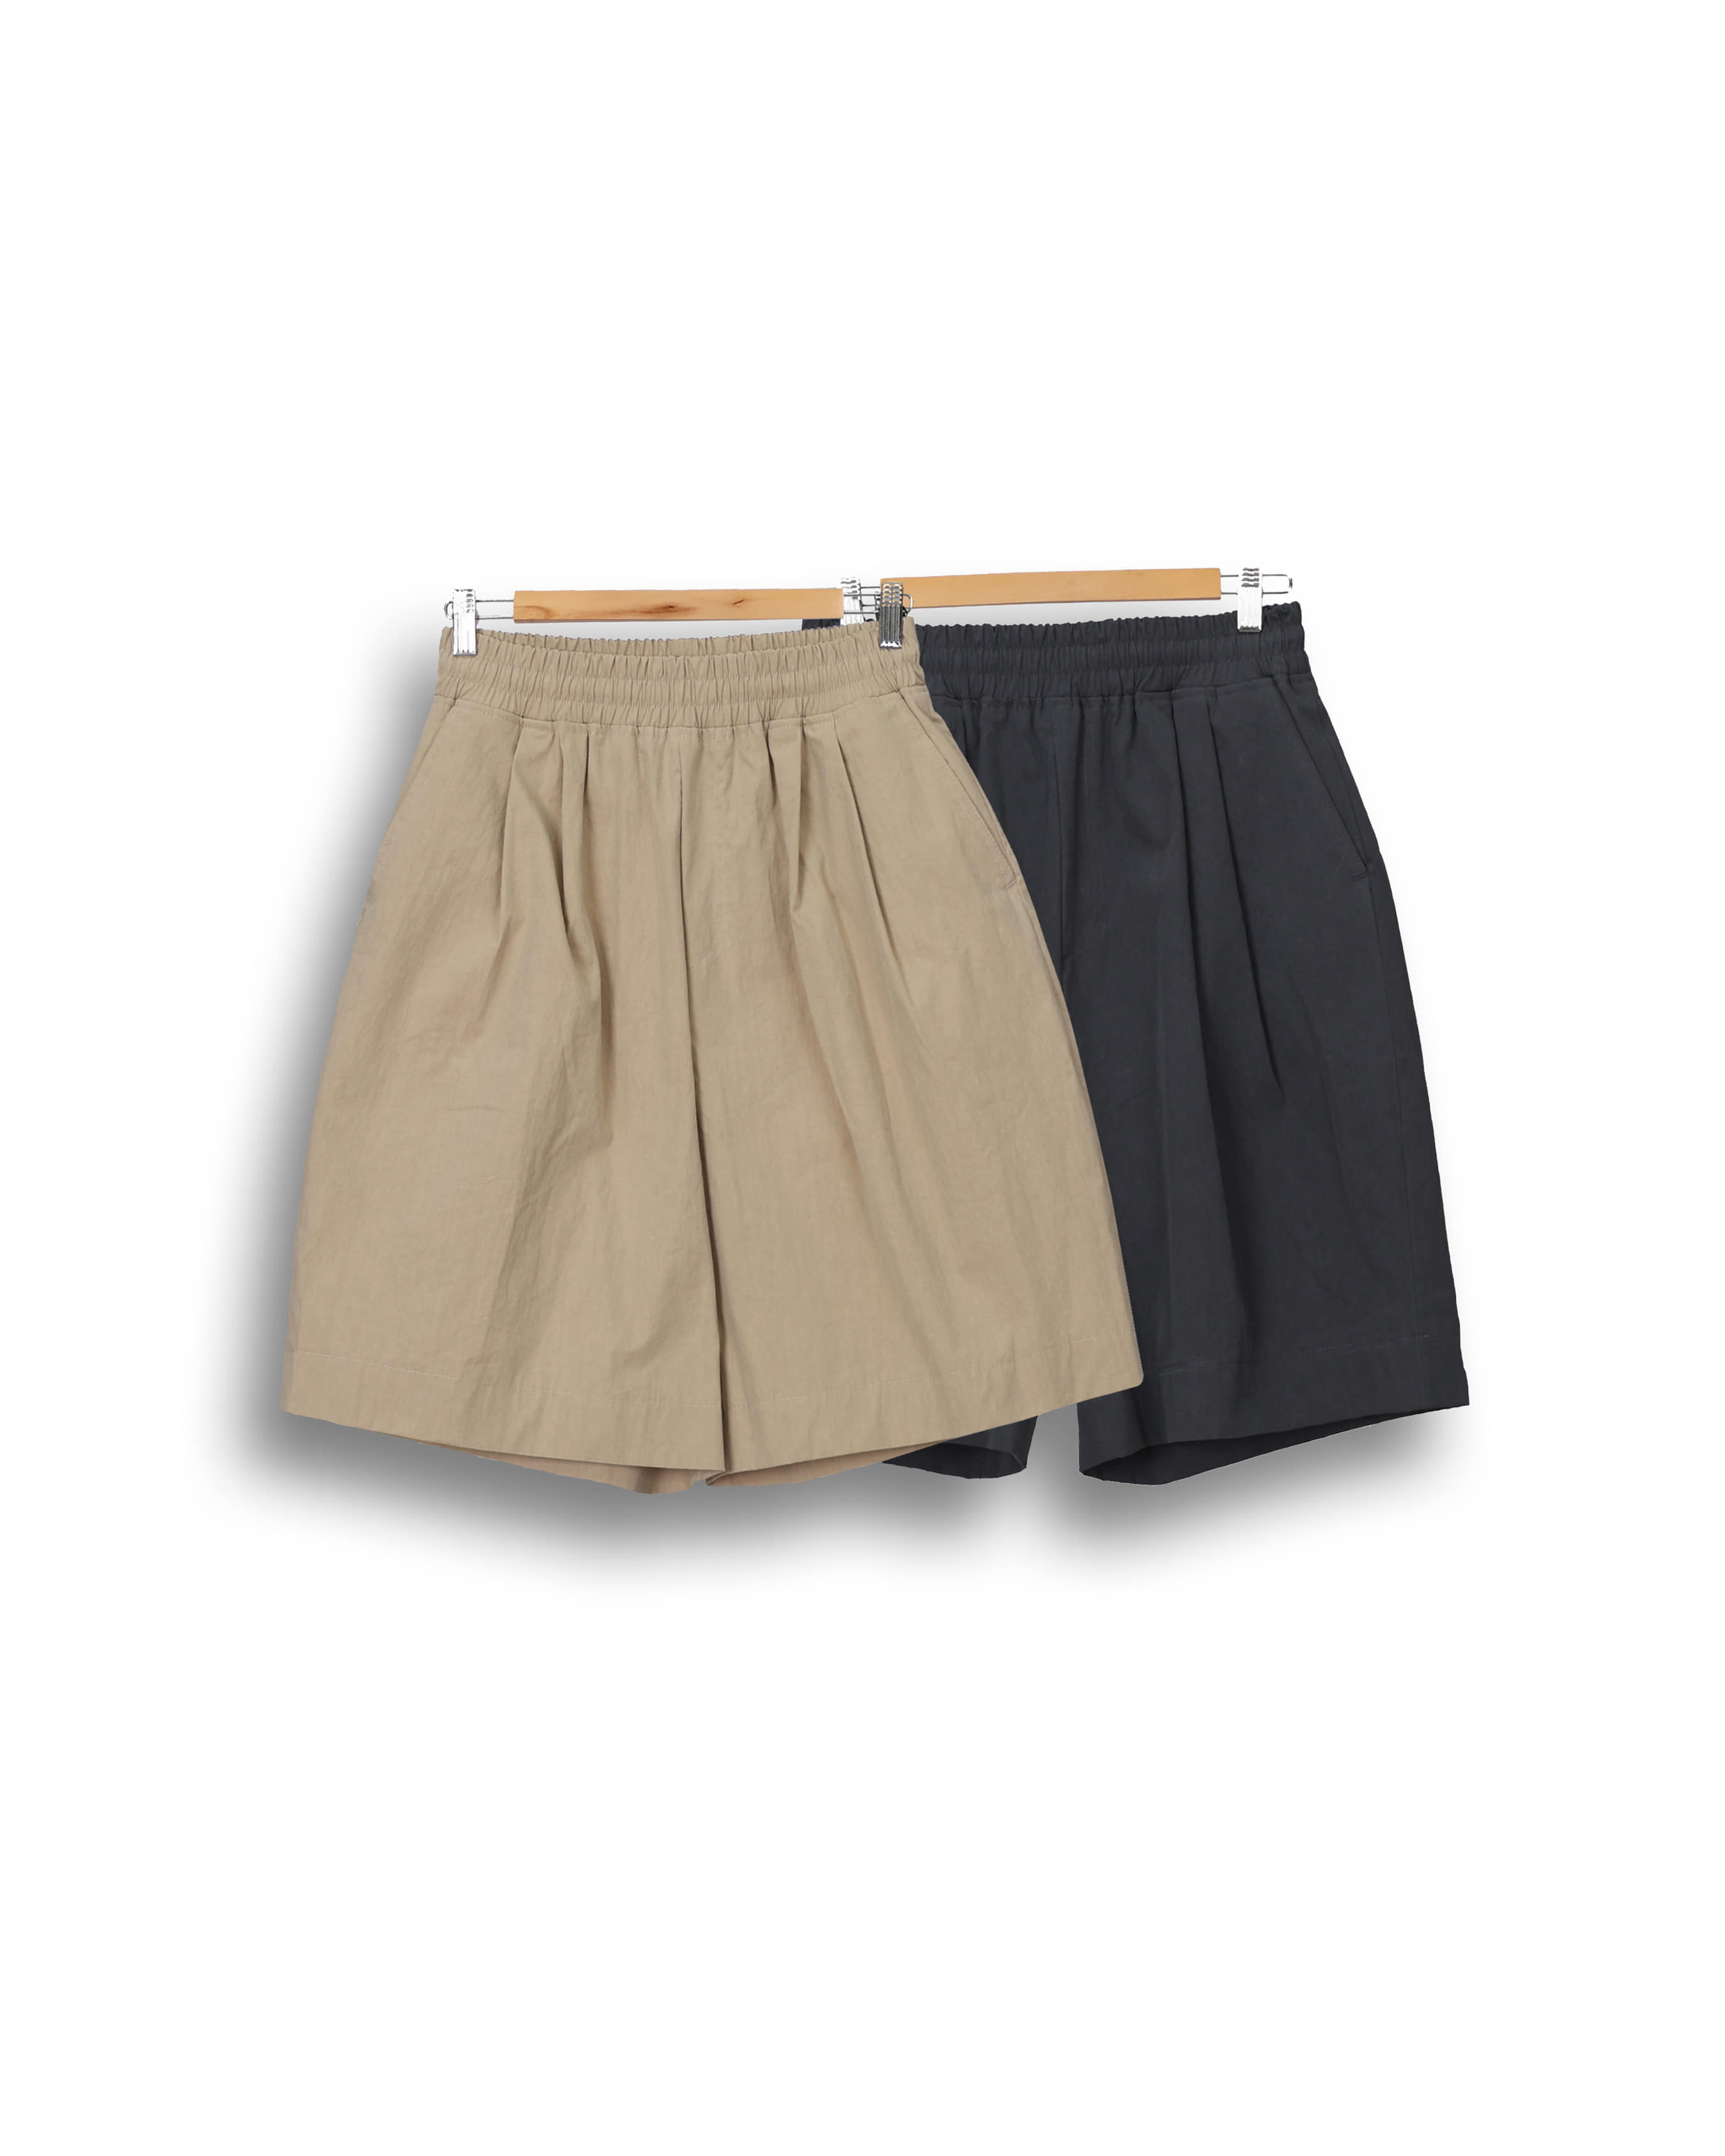 UNIBON CN Wide Bermuda Pants (Charcoal/Beige)